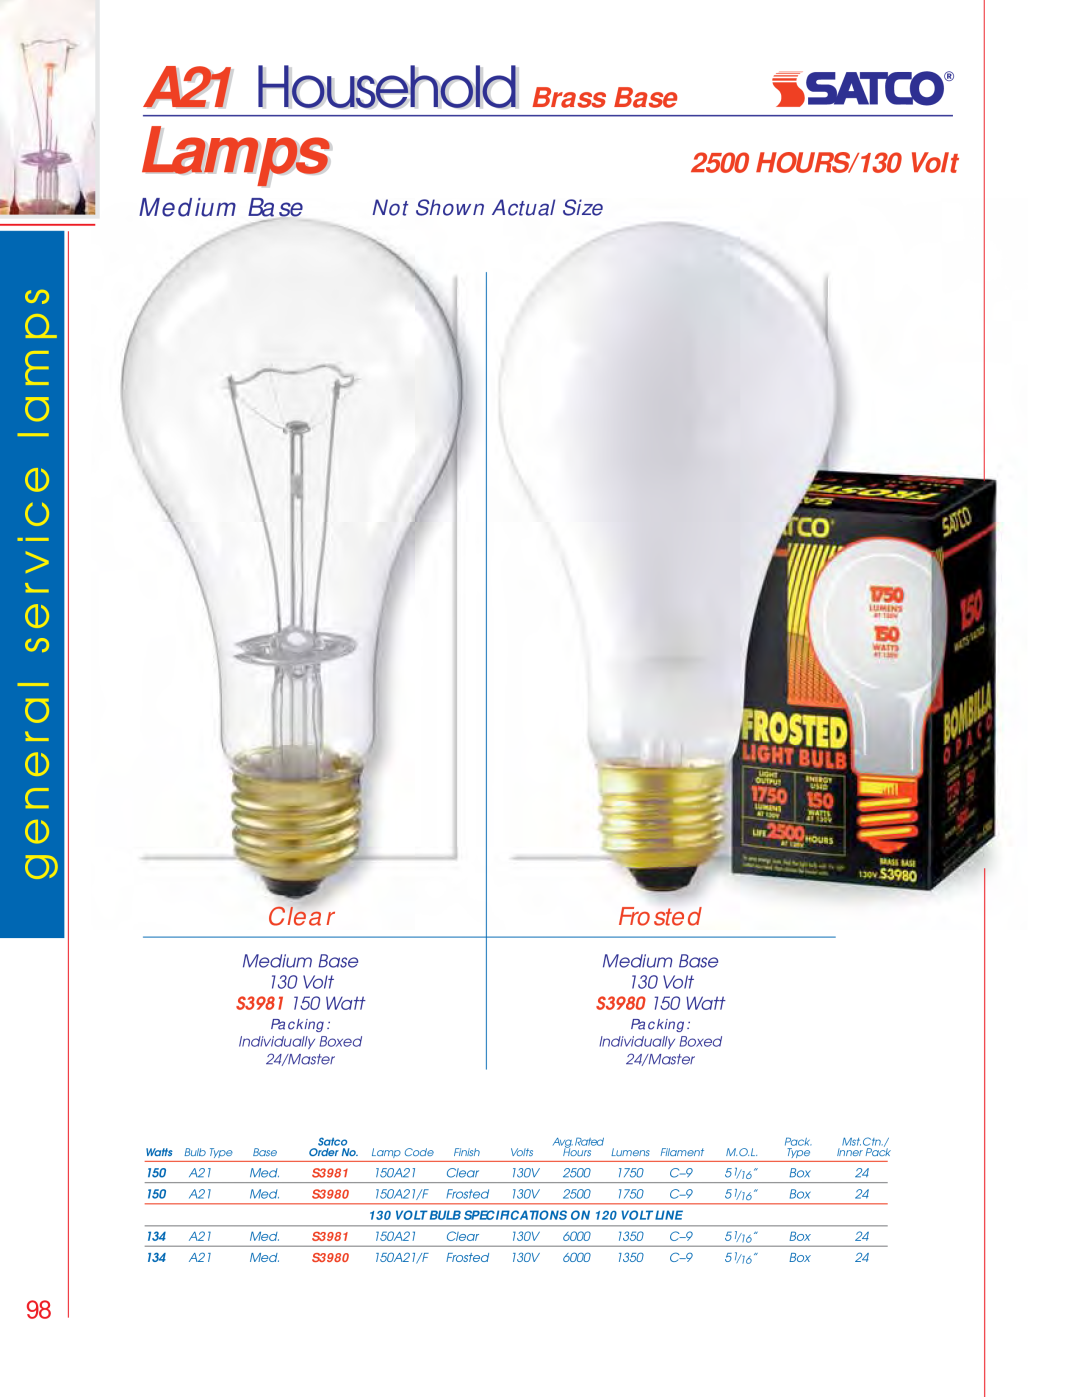 Satco Products S3692 A21 Householdld Brass Base, HOURS/130 Volt, Lamps, g e n e r a l s e r v i c e l a m p s, Medium Base 